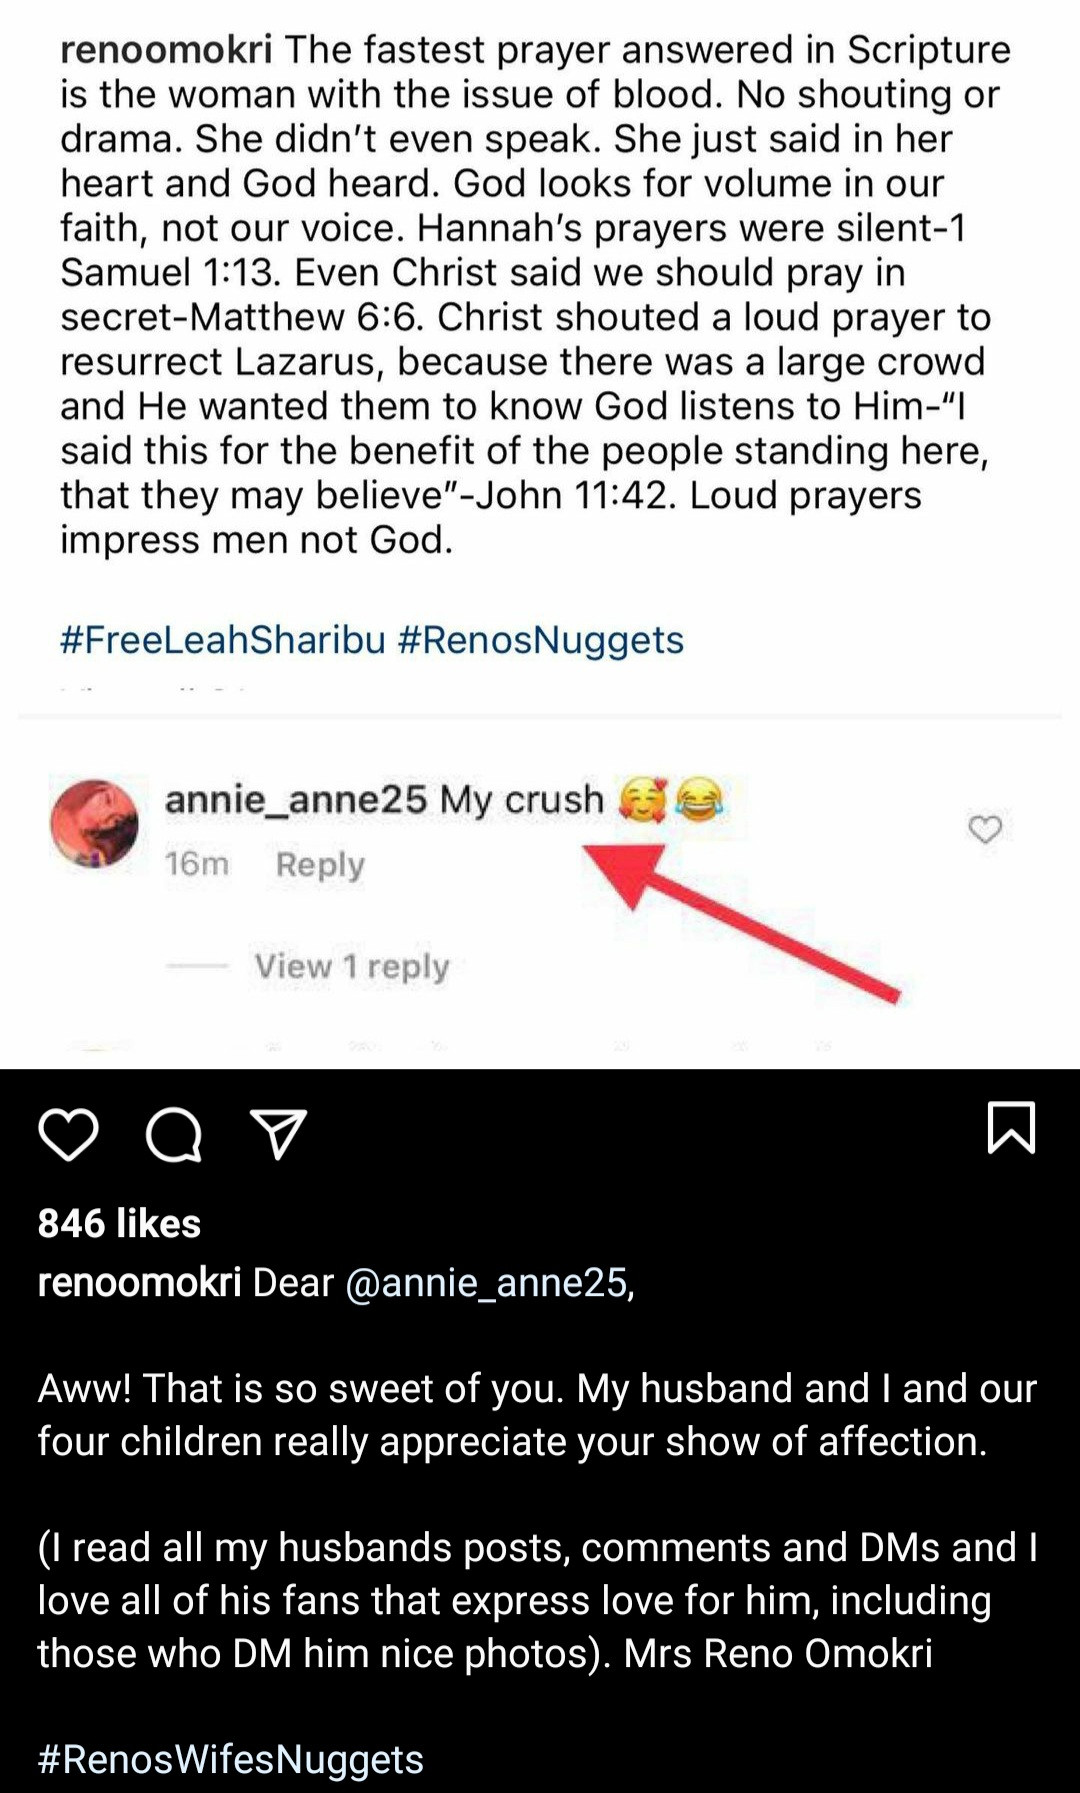 Reno Omokri's wife replies